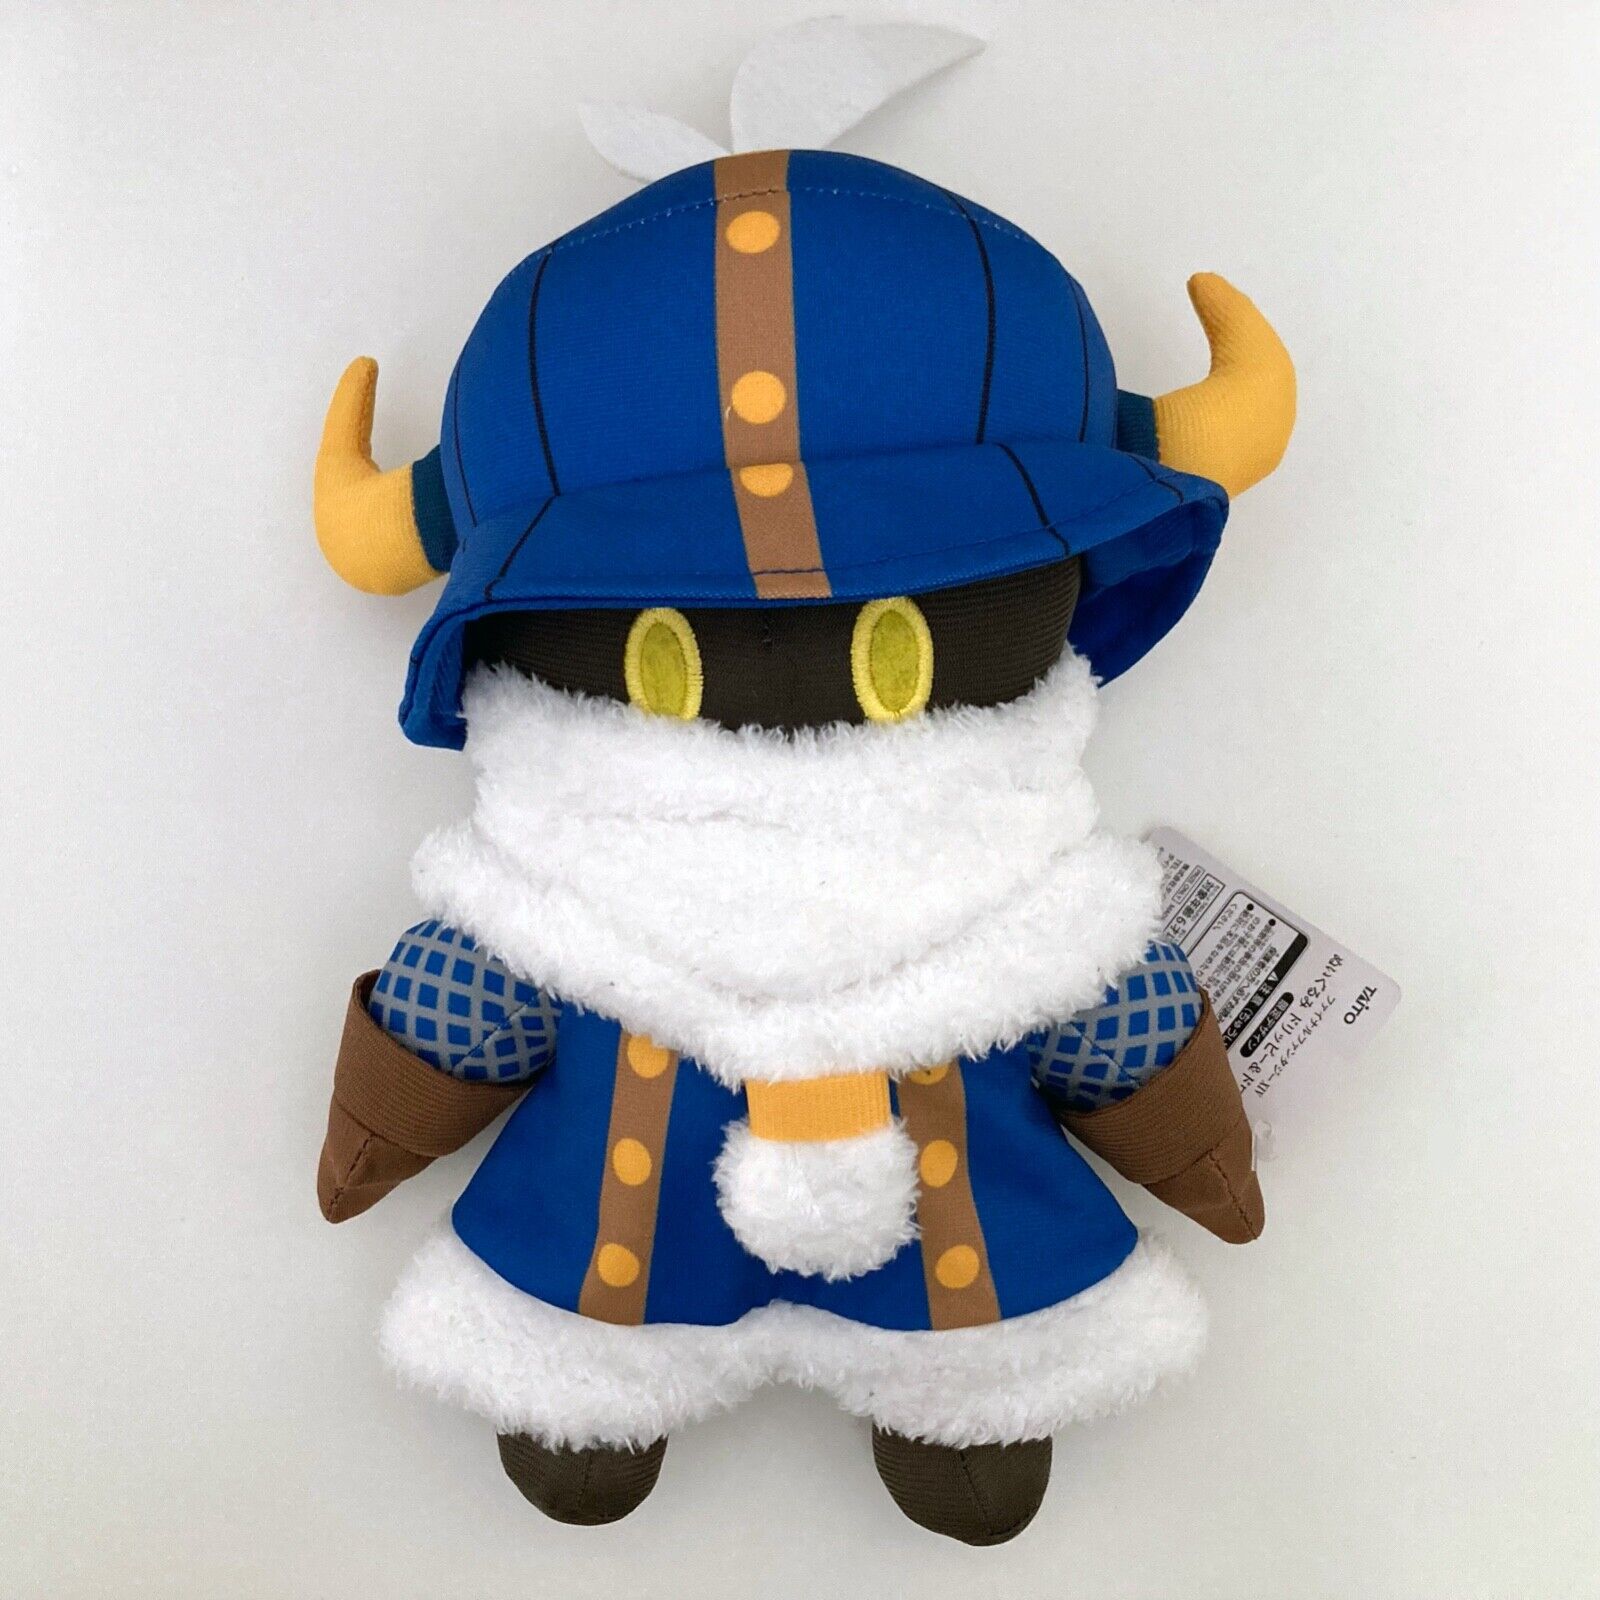 FINAL FANTASY XIV FF14 Dwarf Plush Stuffed Toy Doll TAITO Prize US Seller (used)